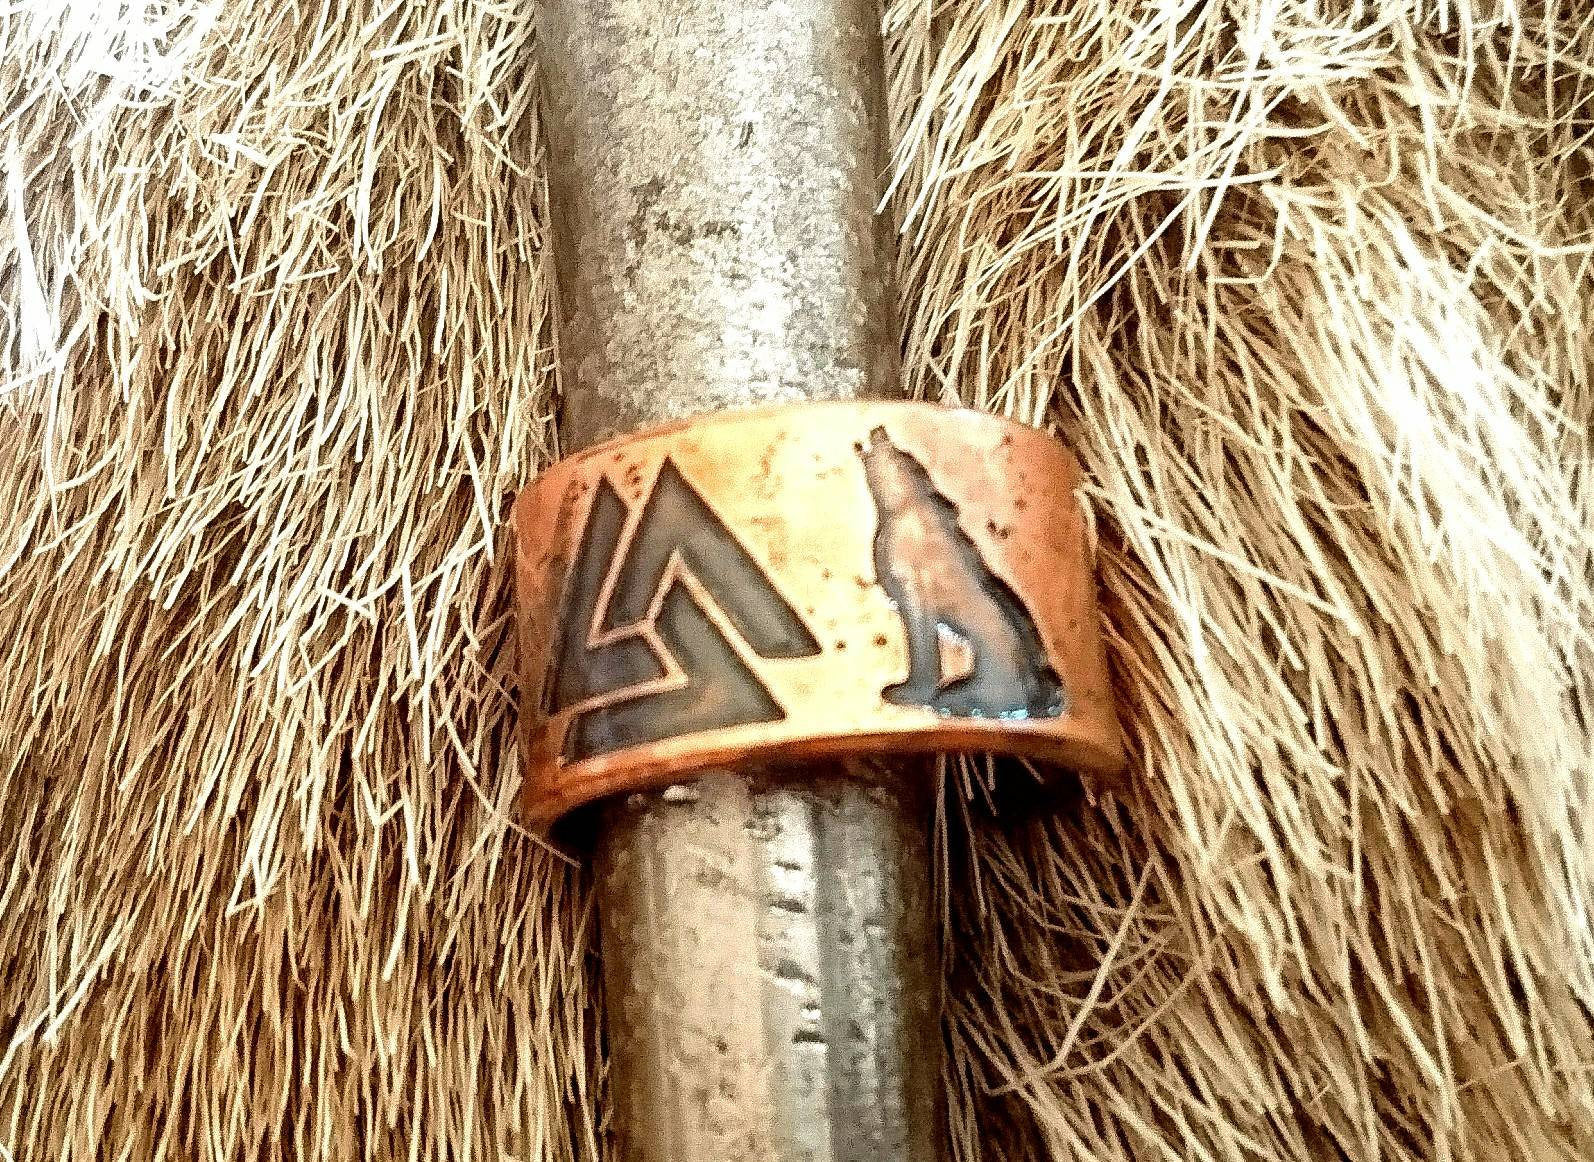 Norse Valknut Ring with Wolves (Geri and Freki) or Ravens (Hugin and Munin) Ring copper bronze brass viking wolf pagan heathen